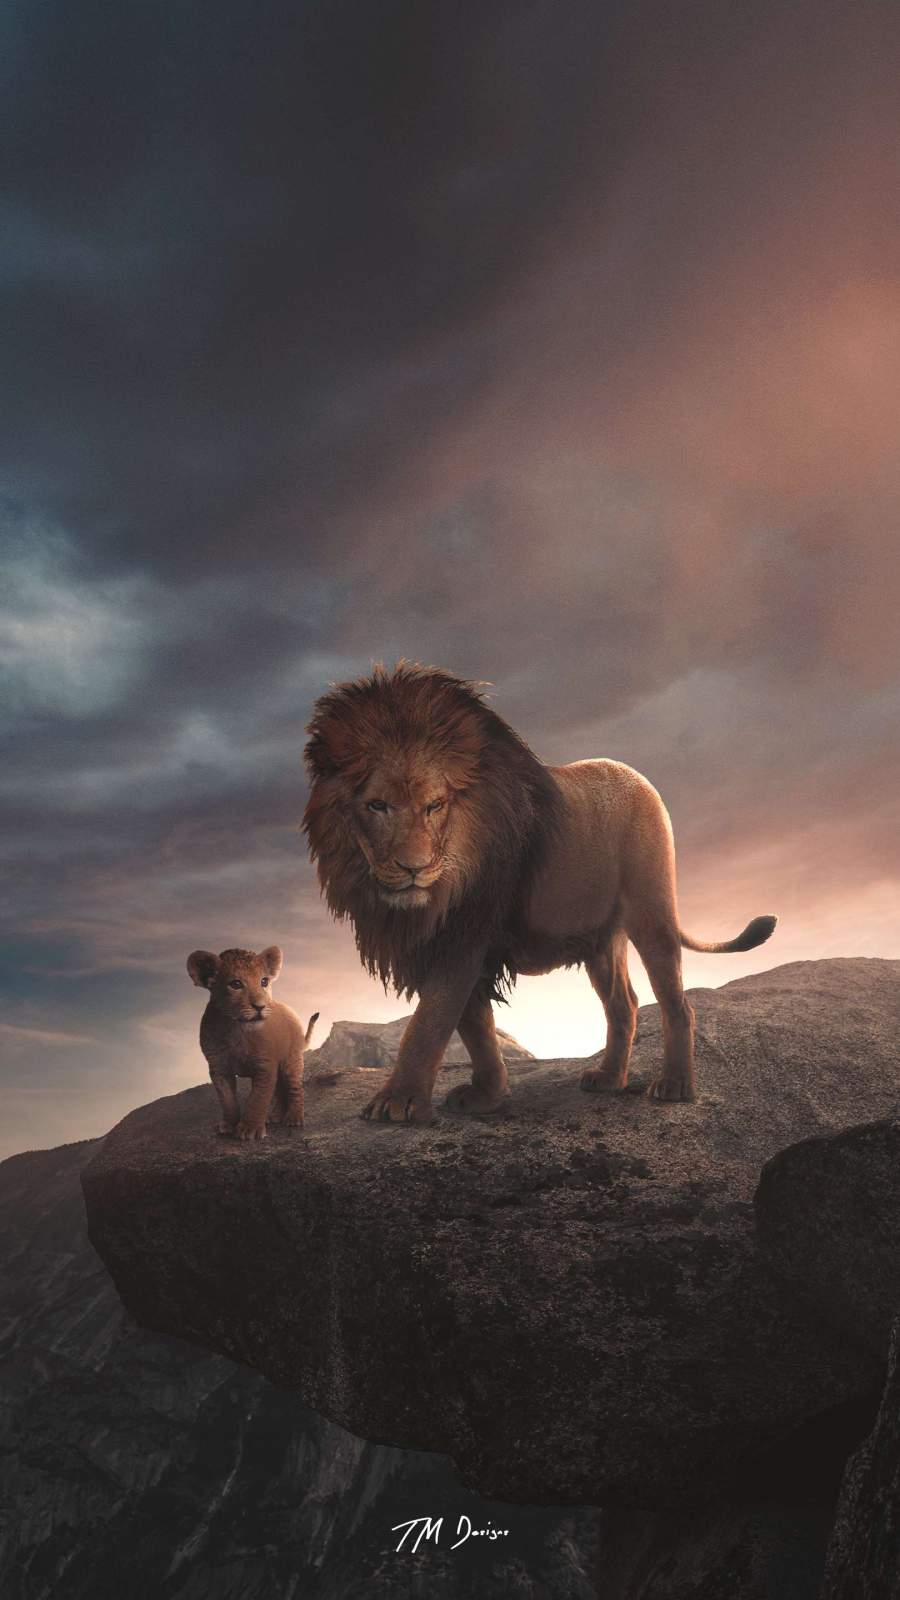 King lion iphone wallpaper